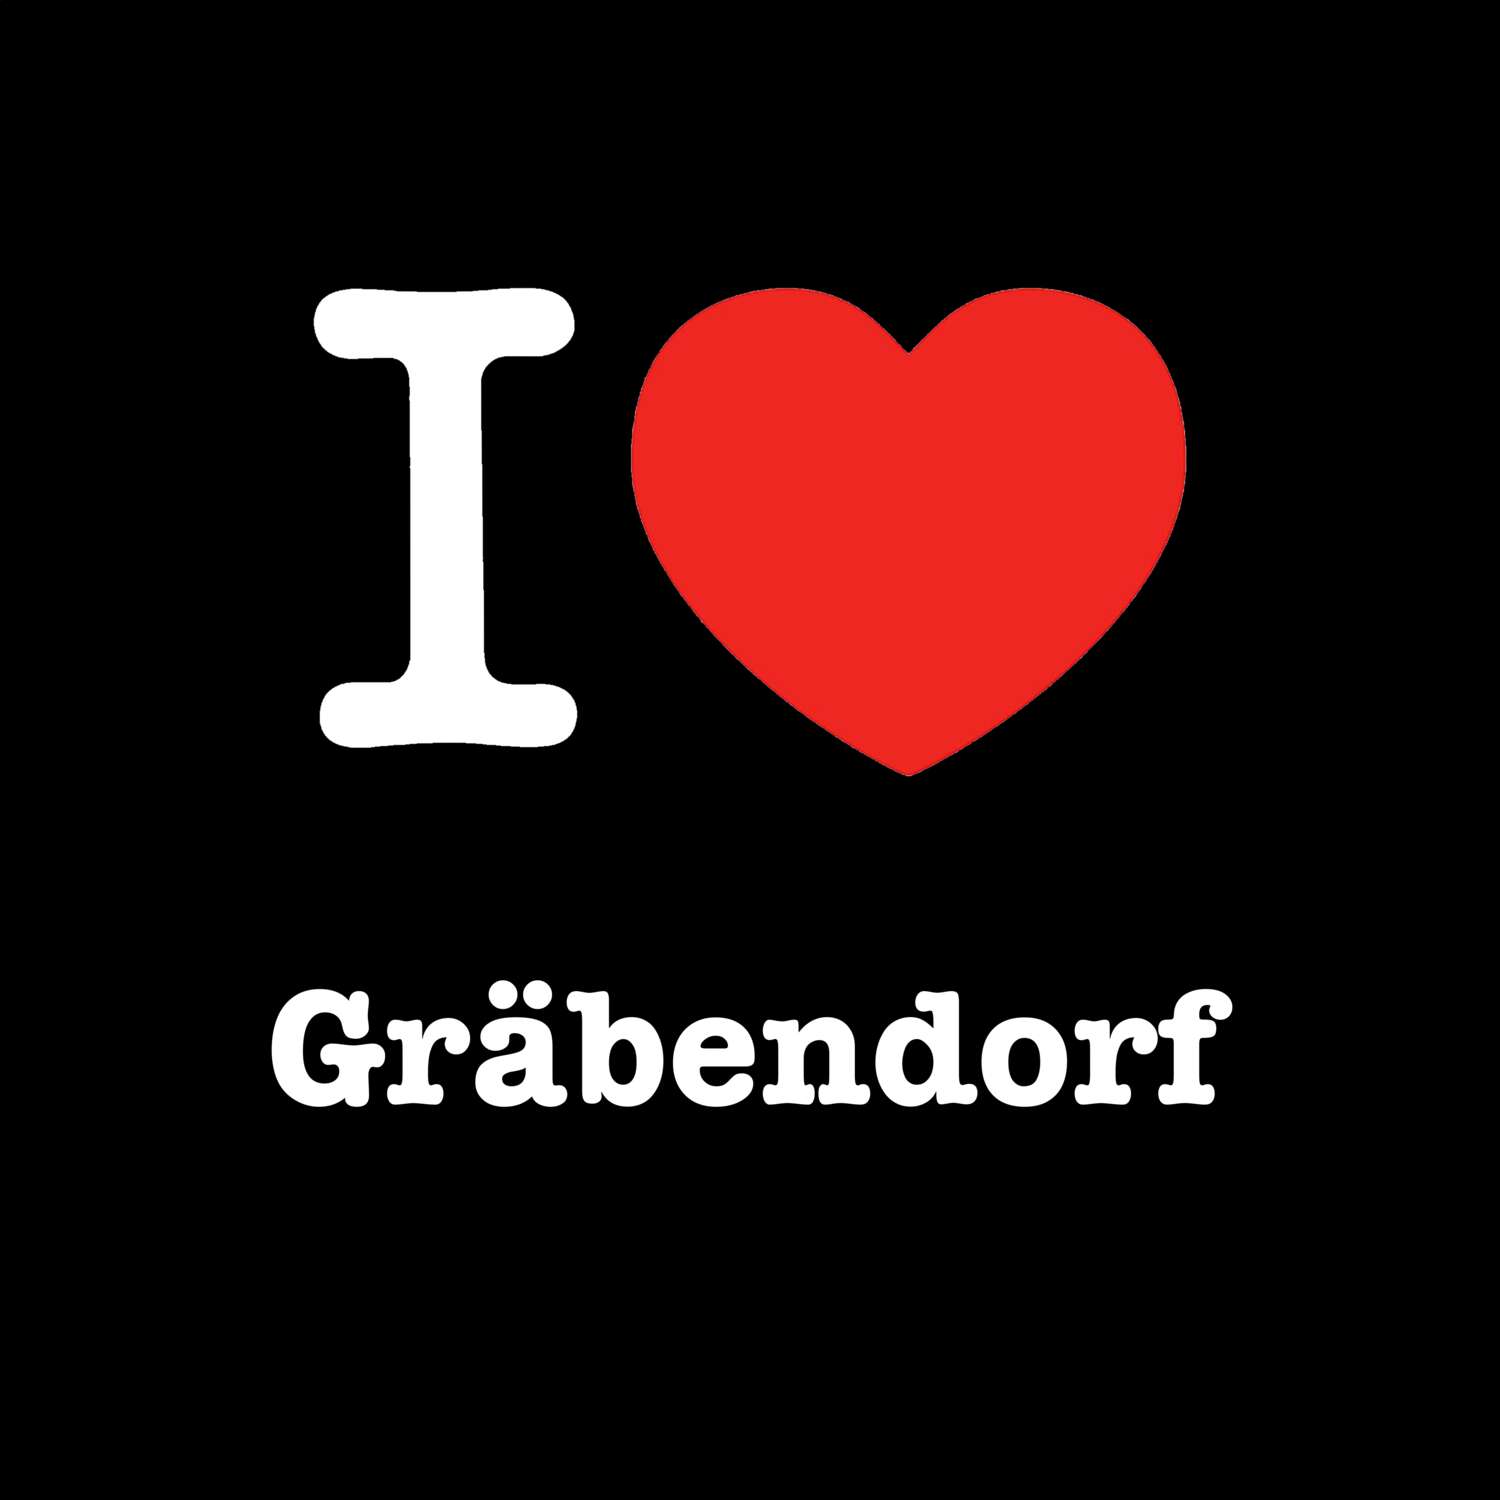 Gräbendorf T-Shirt »I love«